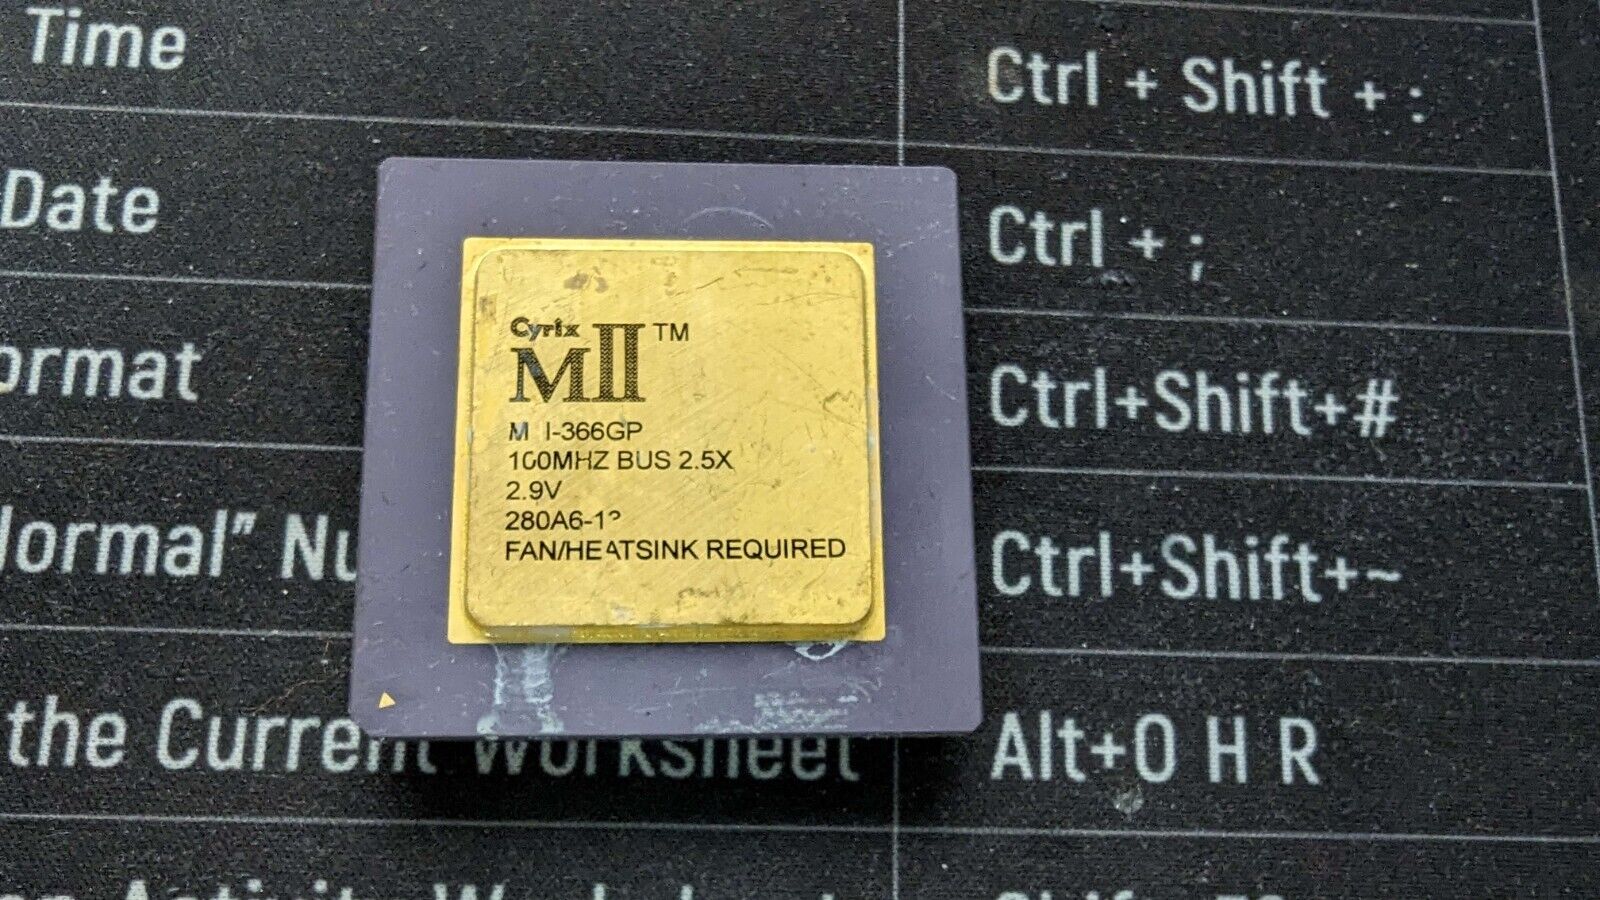 Vintage Rare Cyrix MII MII-366GP 100MHz Bus 2.5X Processor Collection/Gold